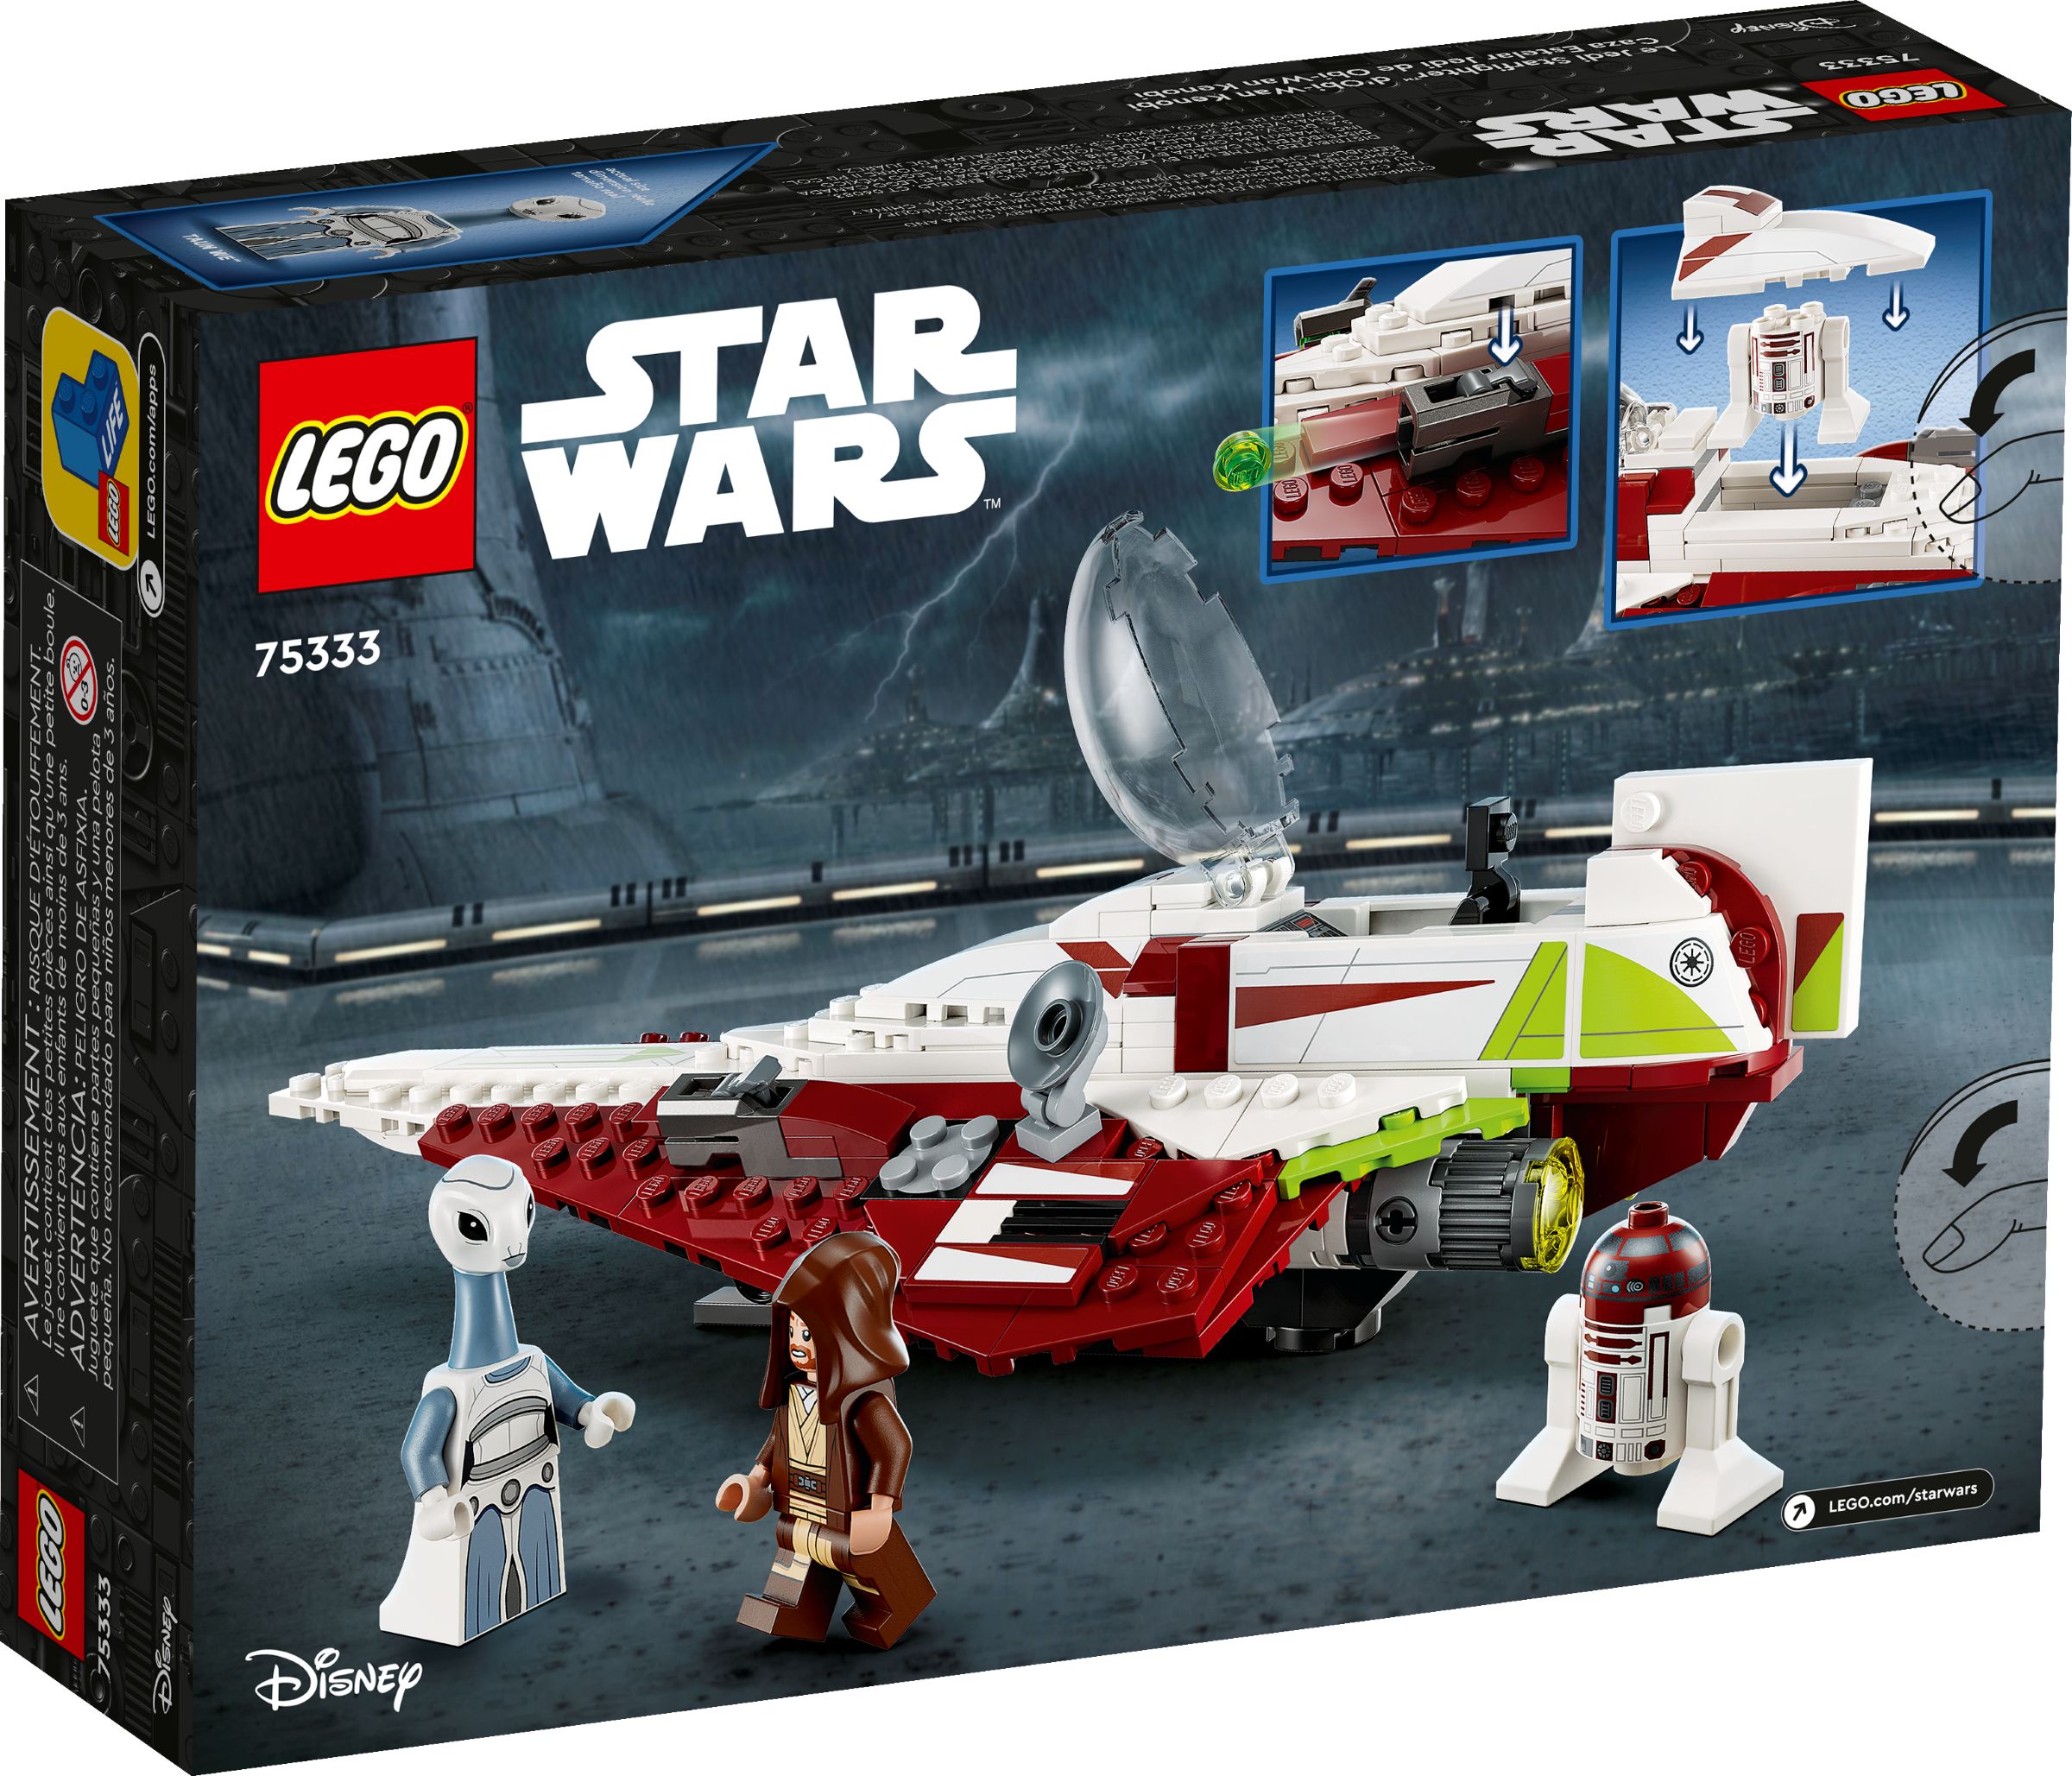 LEGO Star Wars 75333 Obi-Wan Kenobis Jedi Starfighter™ LEGO_75333_alt6.jpg